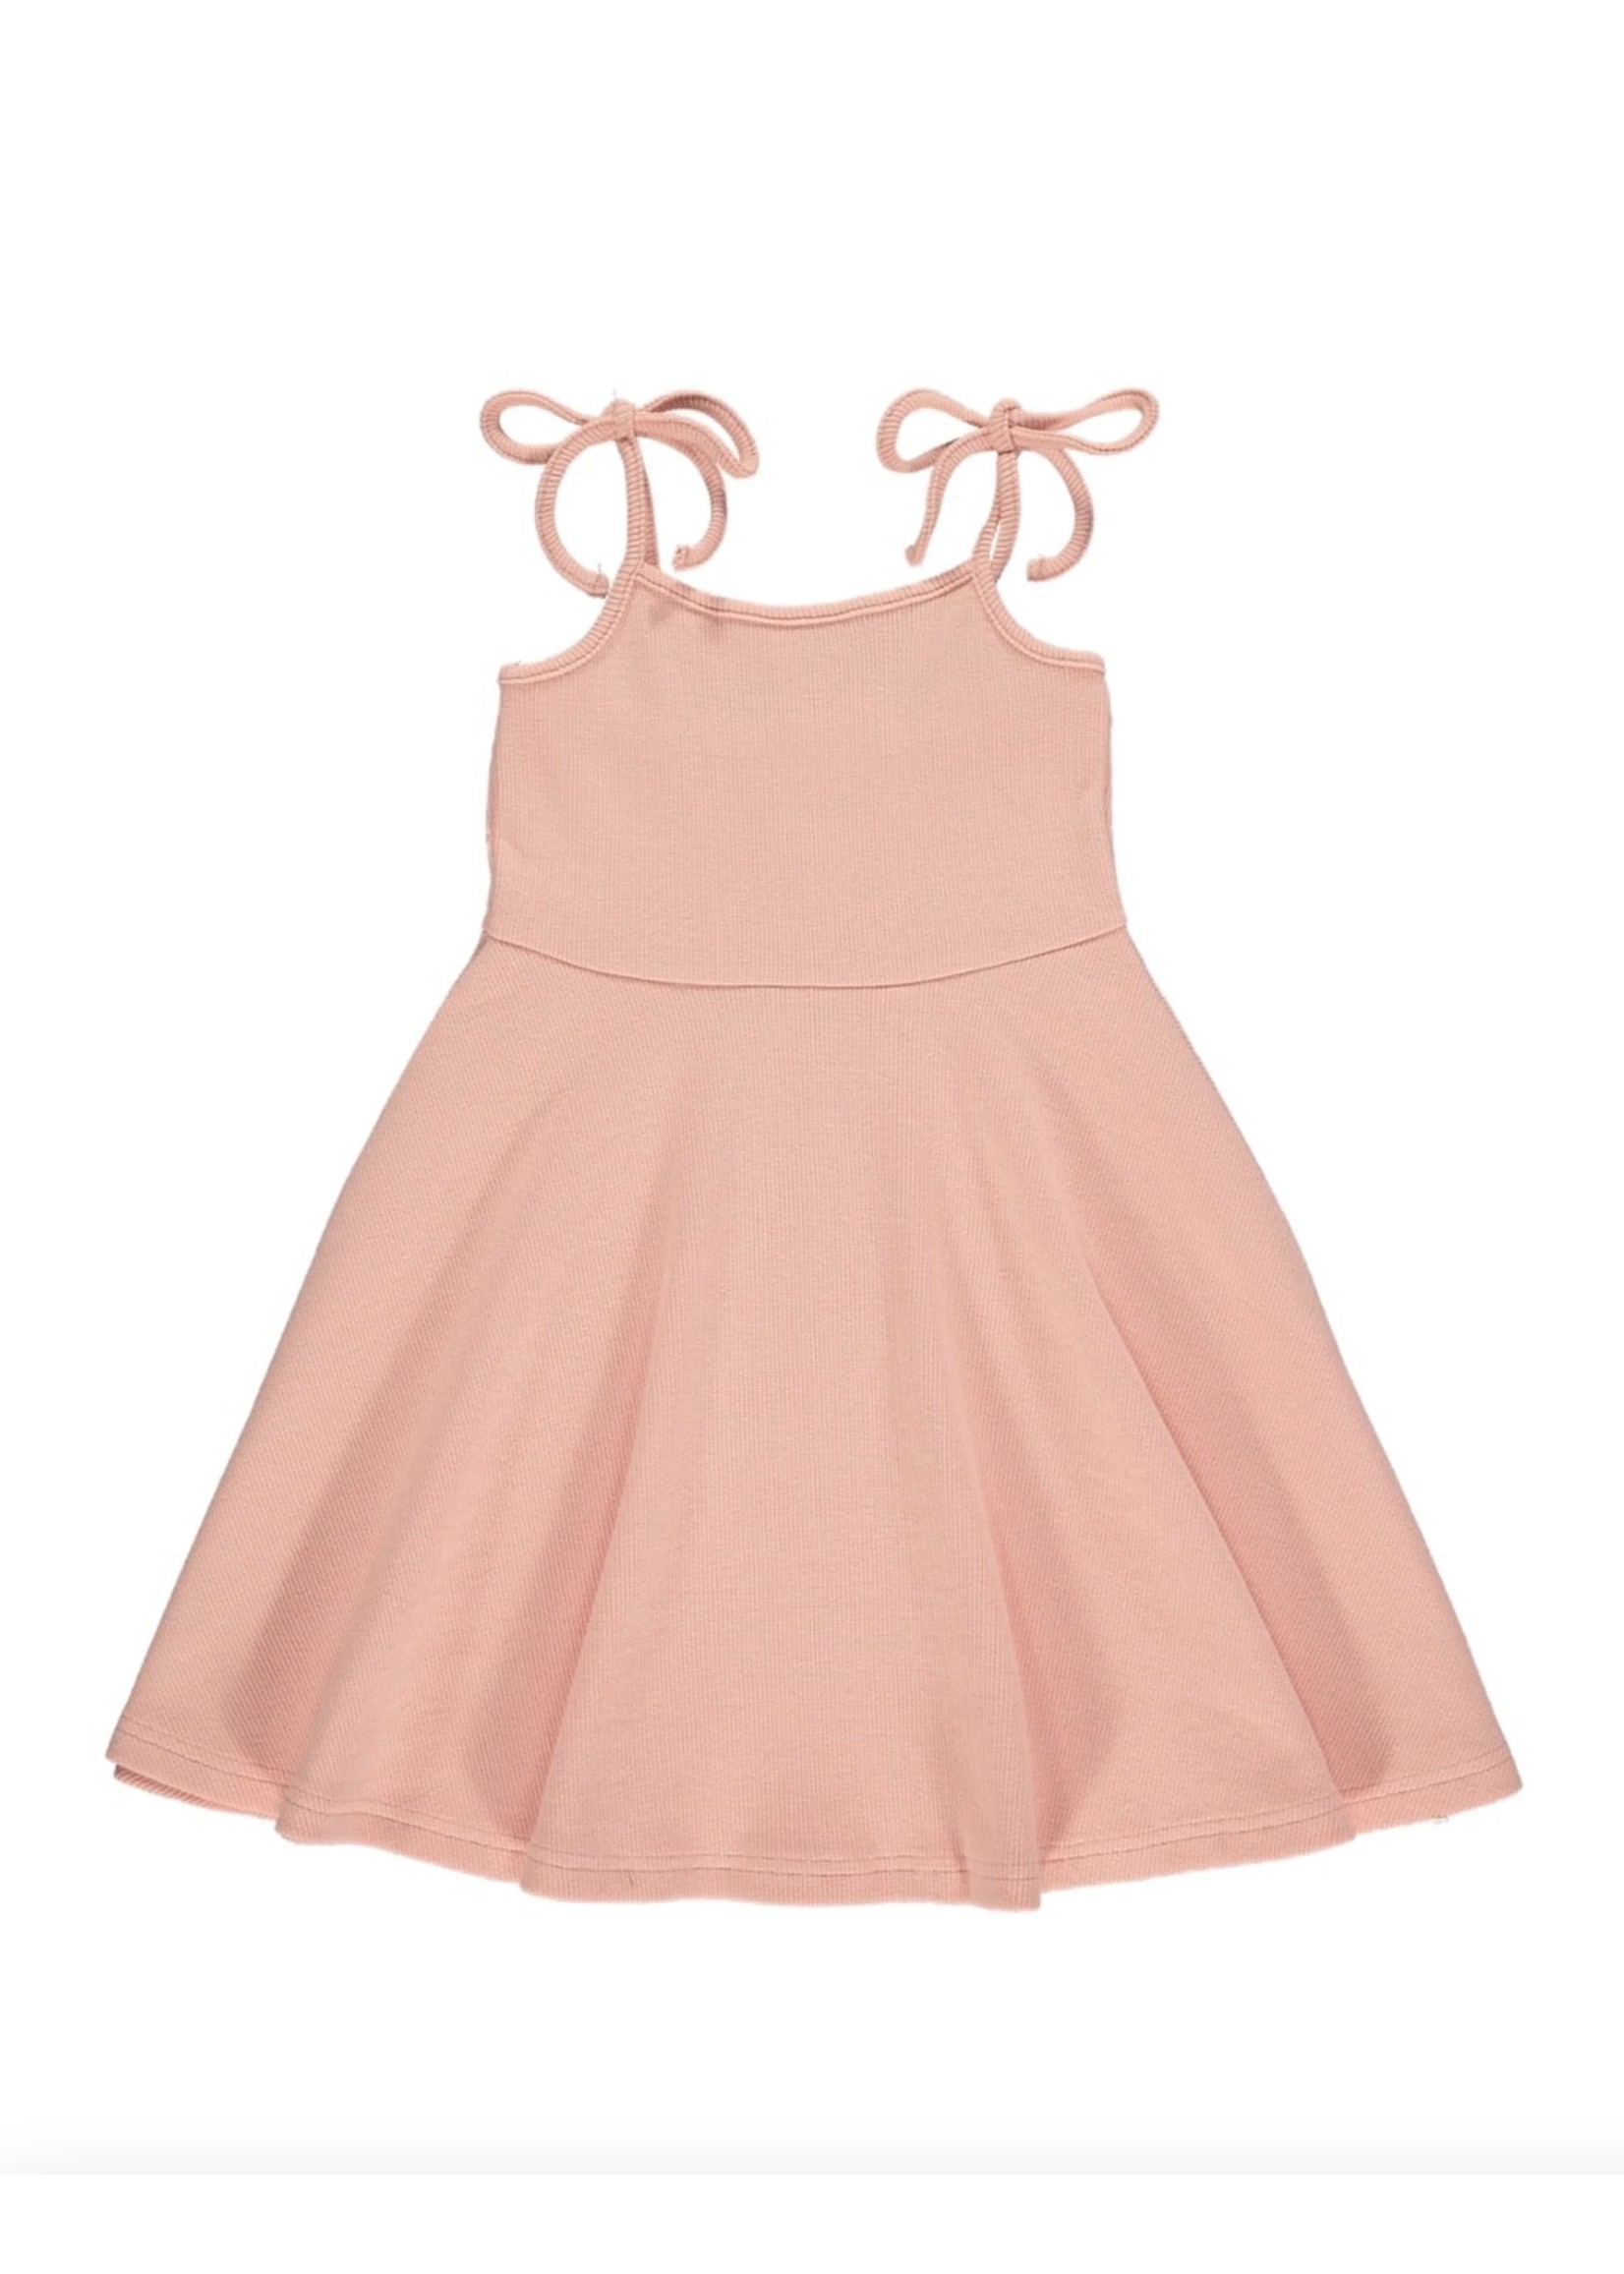 Vignette Vignette, Tori Pink Dress